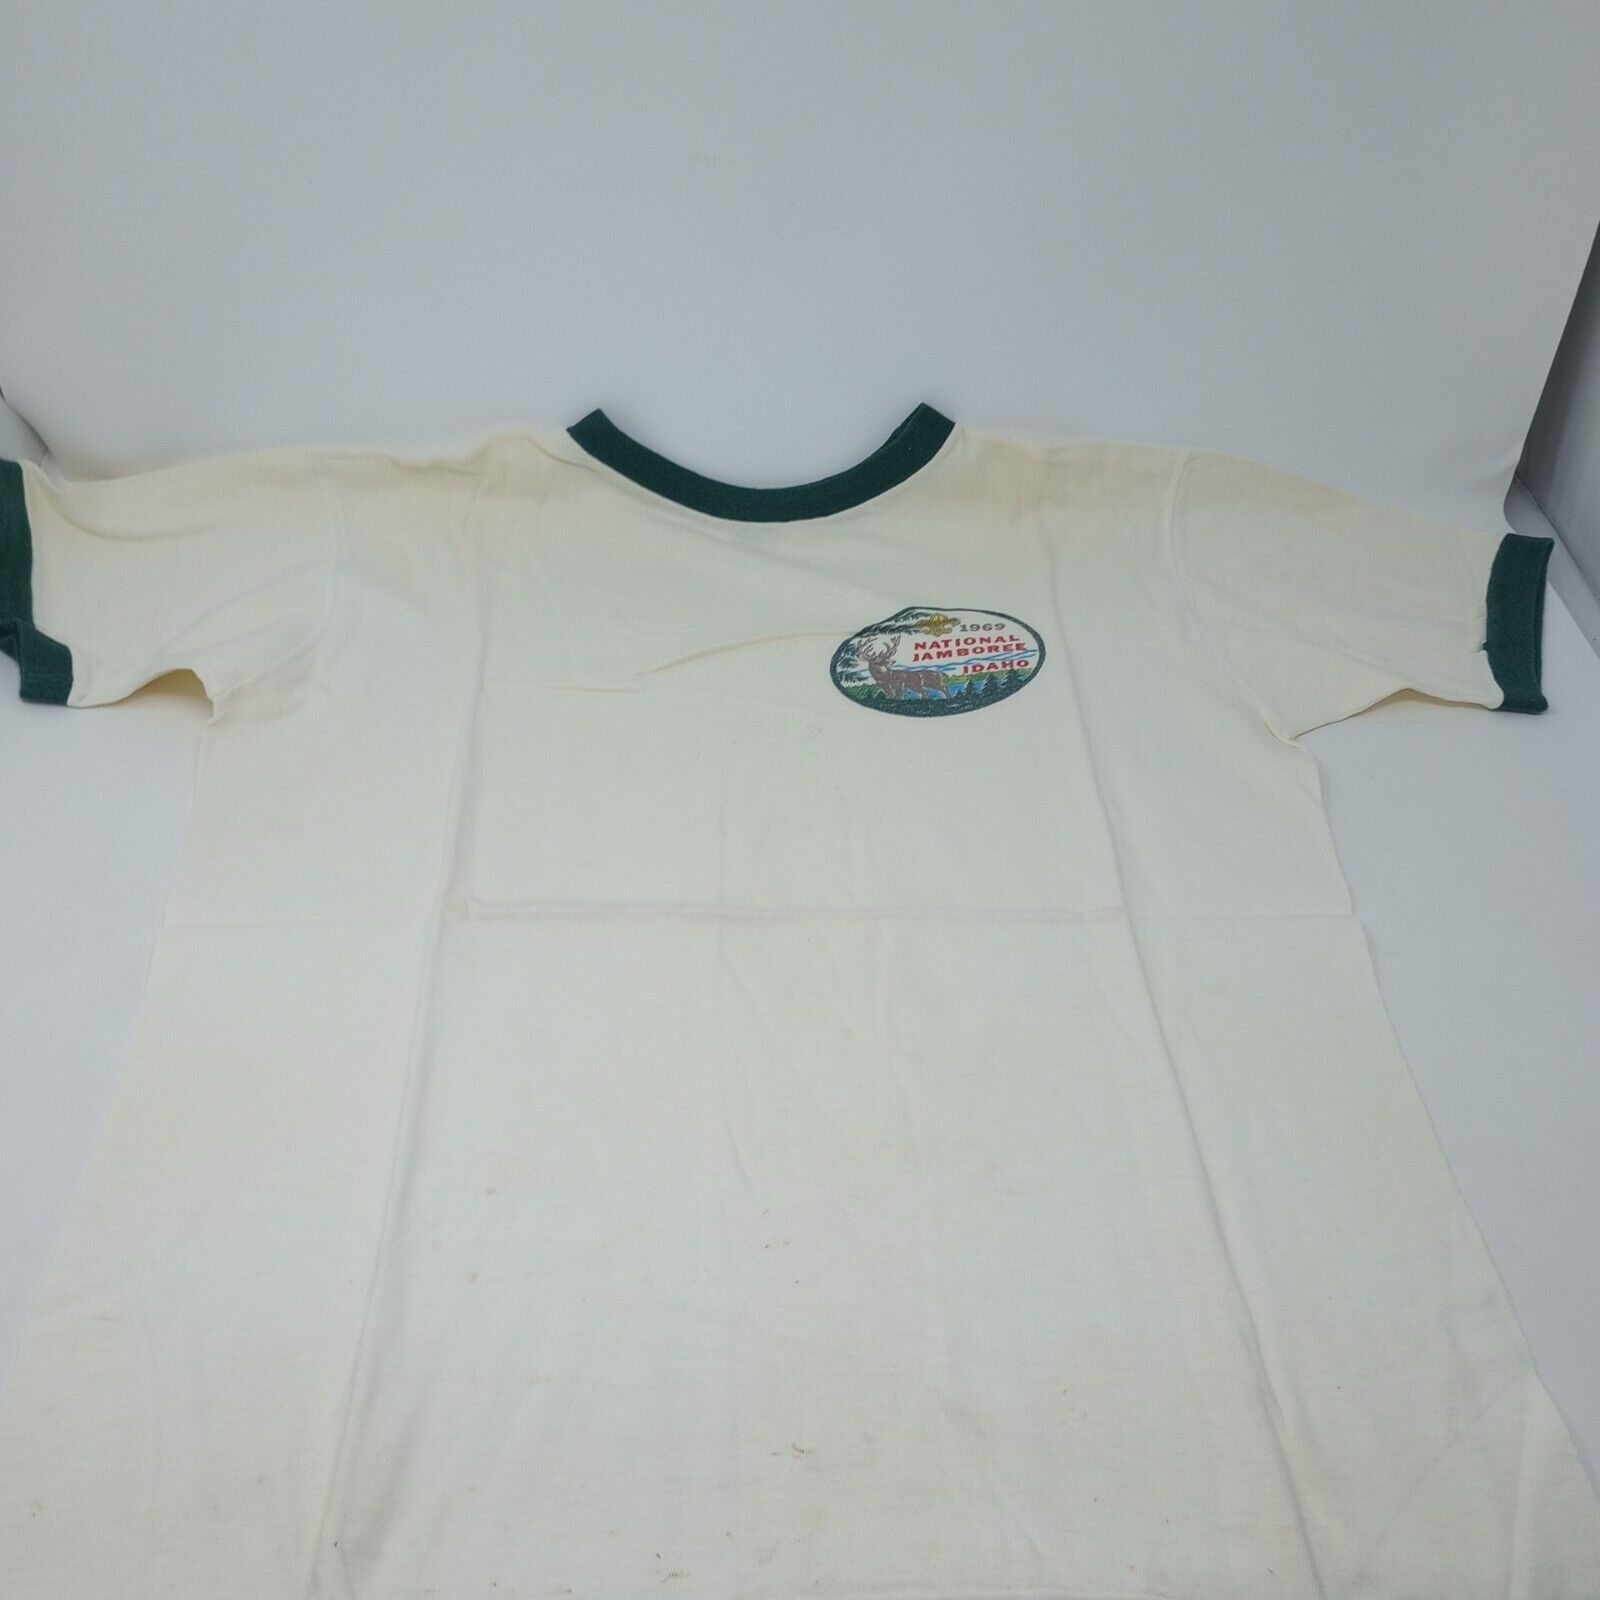 Vintage 1969 Boy Scouts Of America BSA National Jamboree T-Shirt